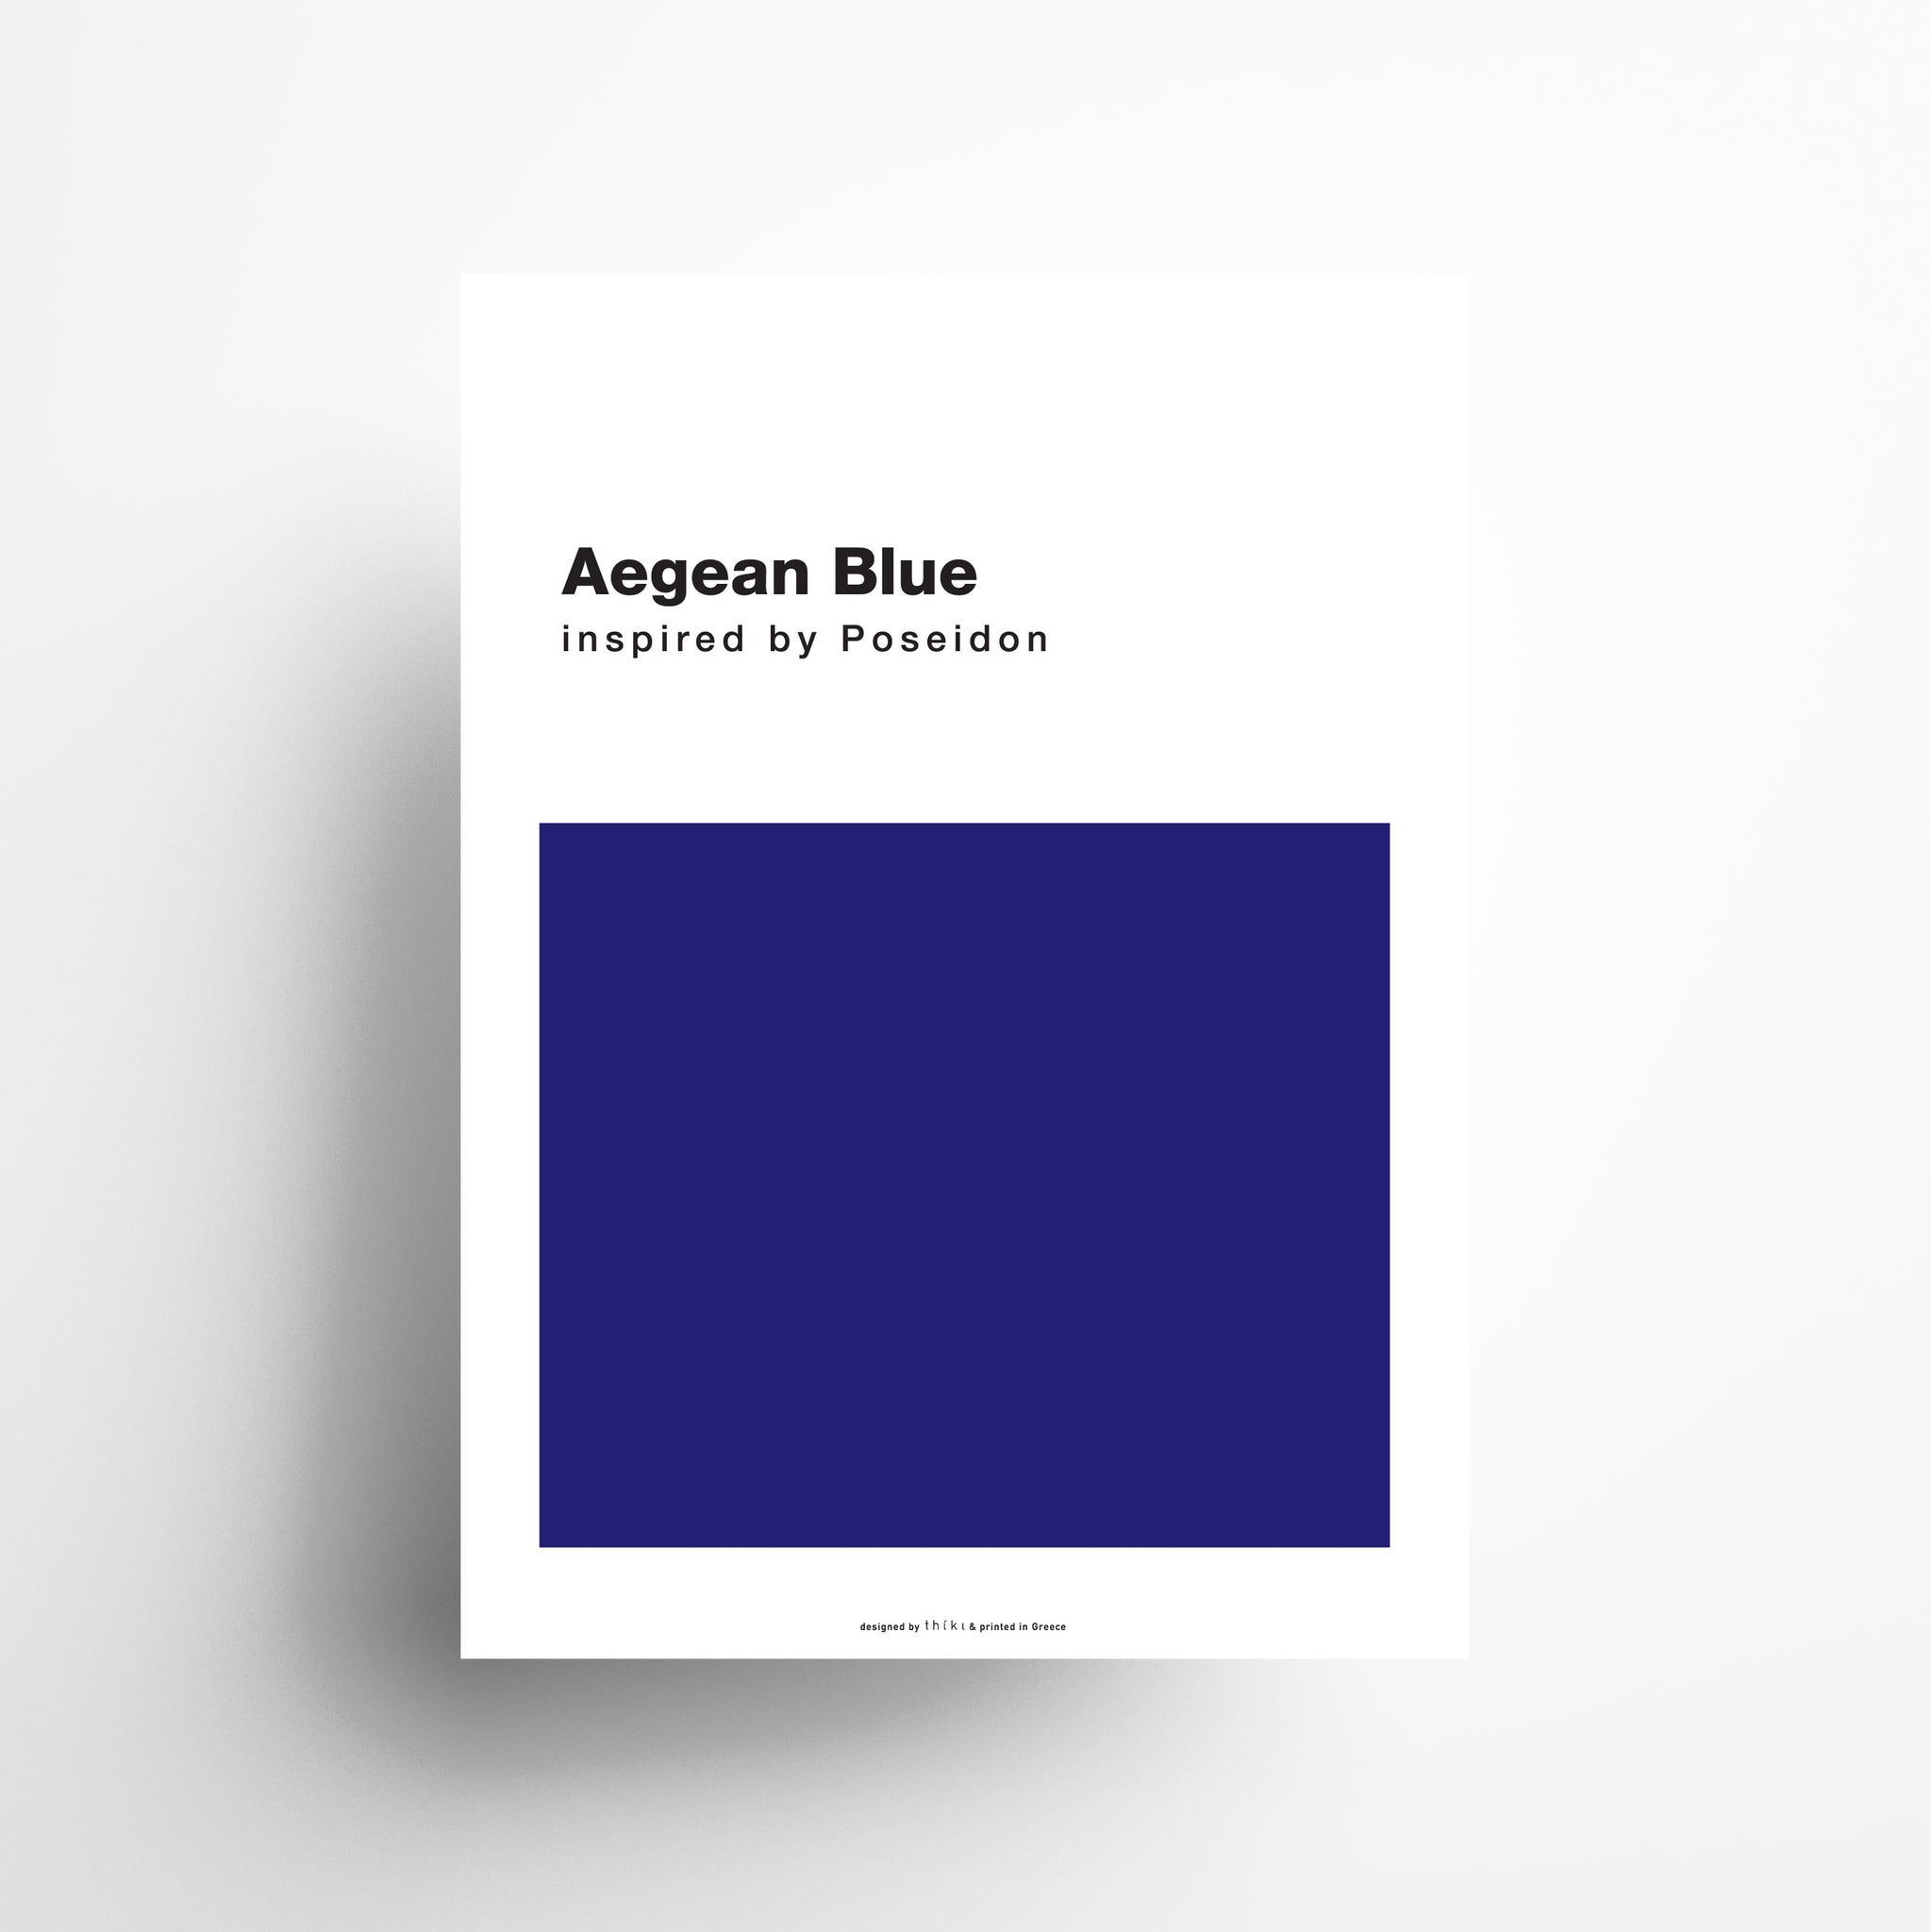 Aegean Blue poster